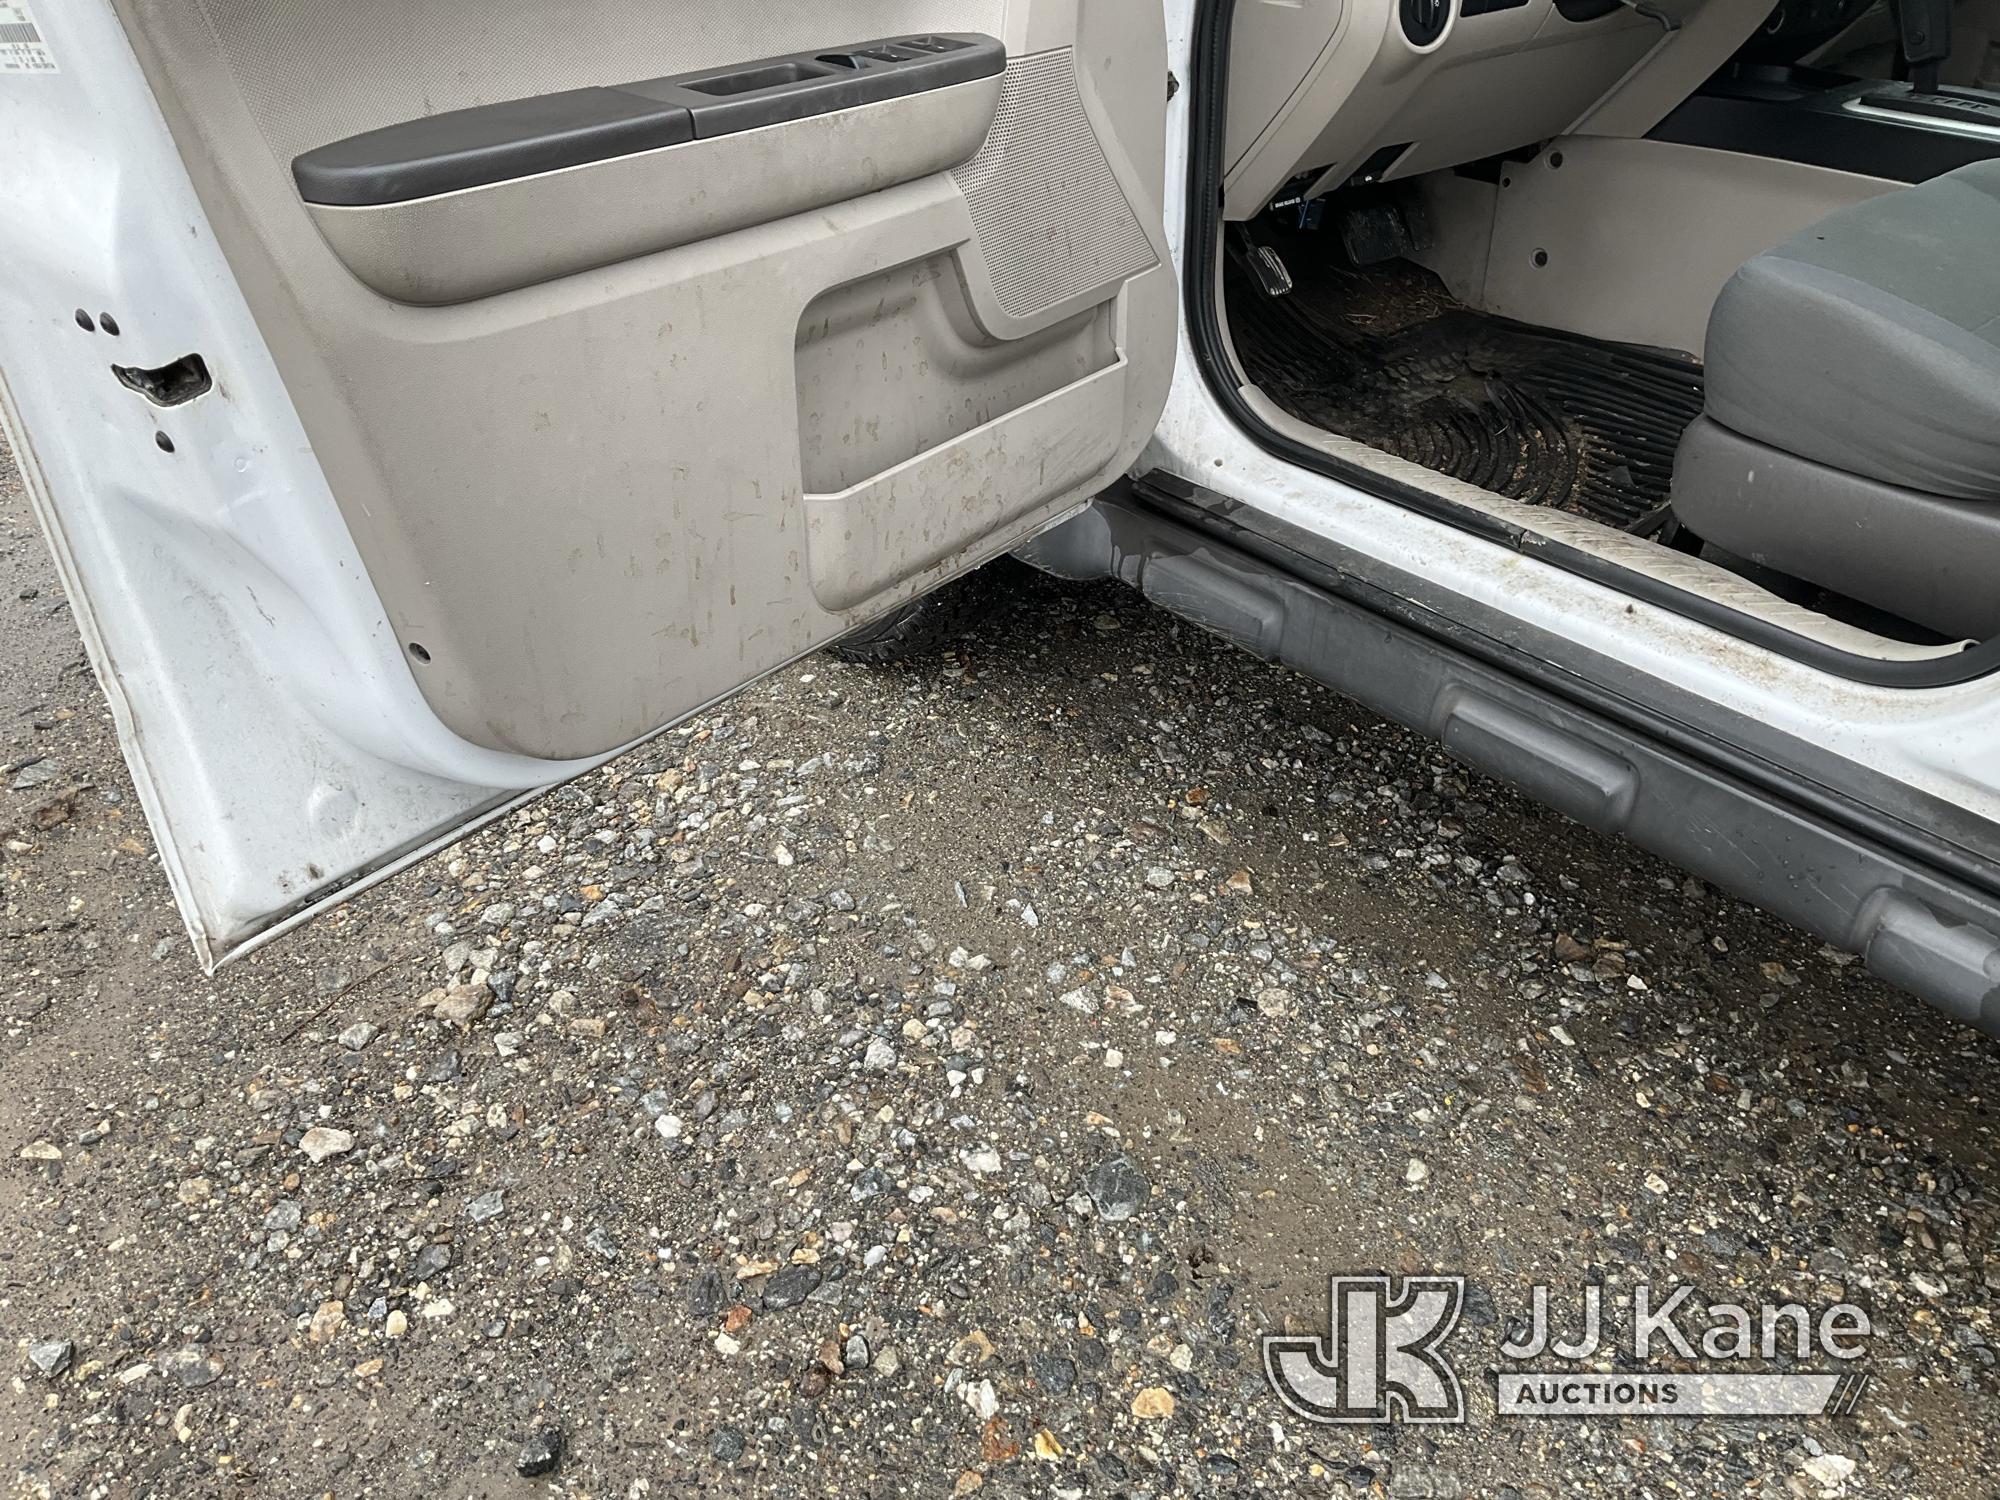 (Shrewsbury, MA) 2011 Ford Escape 4x4 4-Door Sport Utility Vehicle Runs & Moves) (Rust Damage